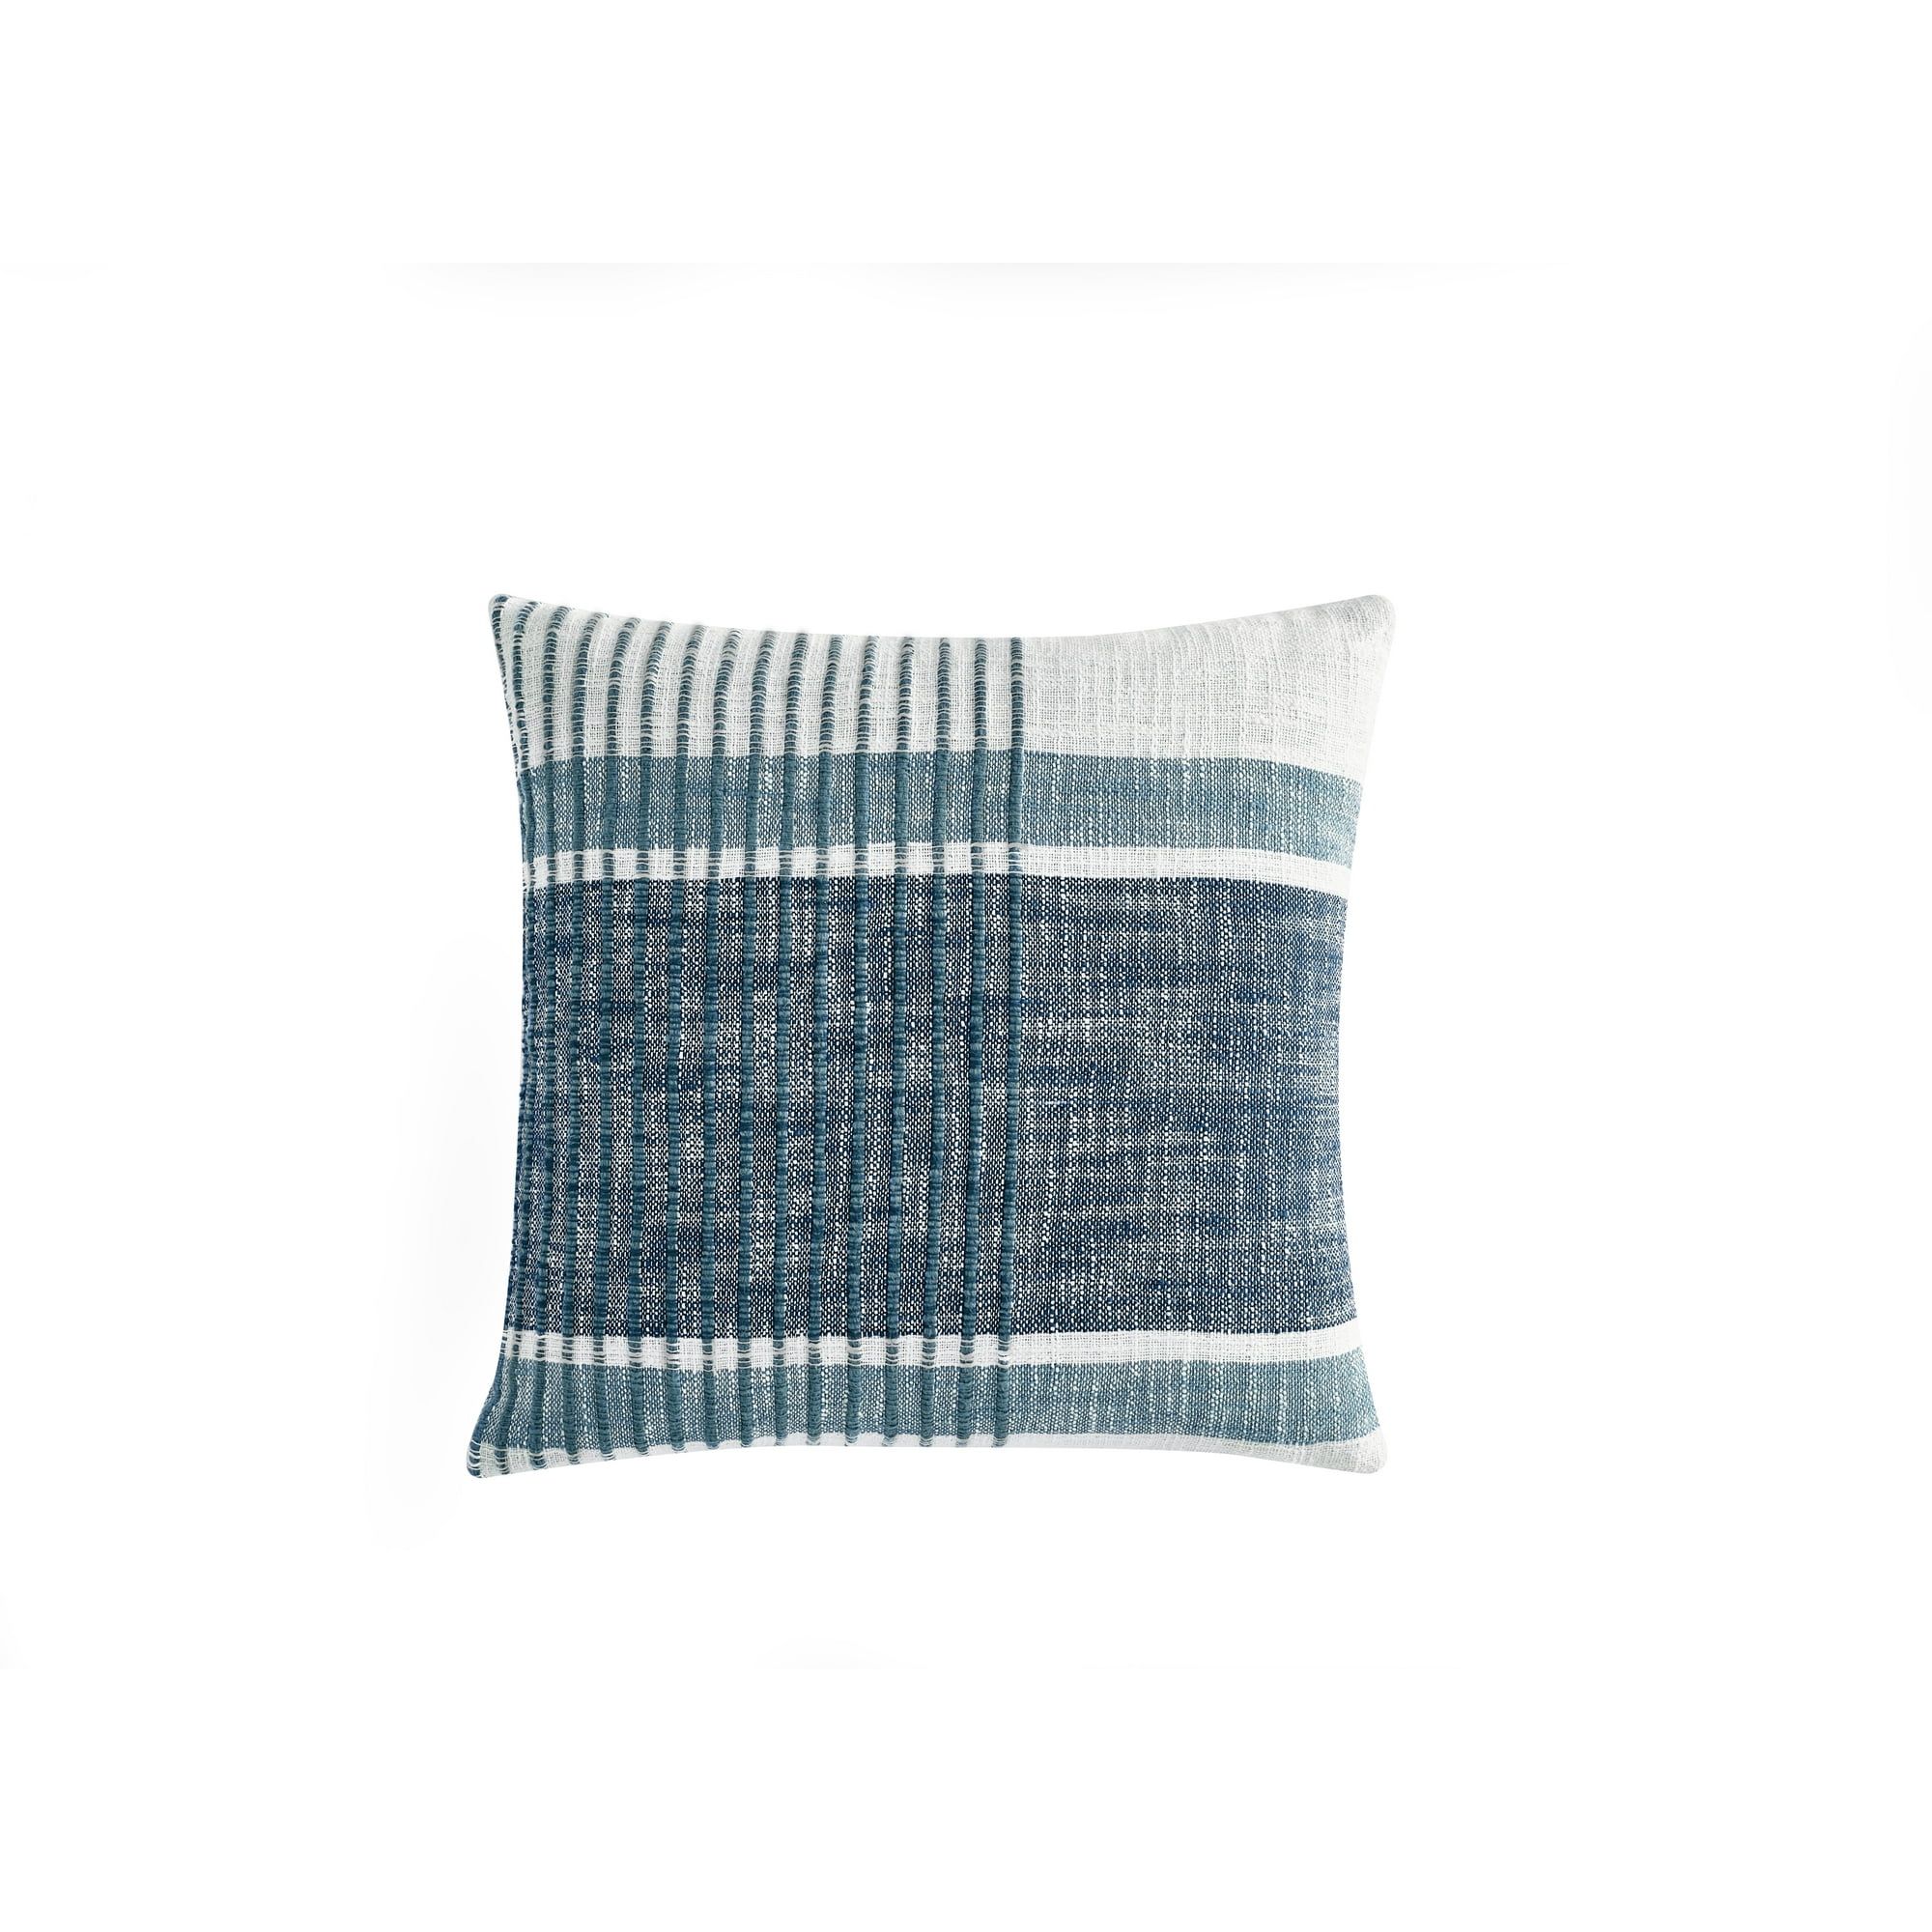 Unbranded, Pingu Decorative Throw Pillow, Square, 18" x 18", Blue, 1 Piece | Walmart (US)